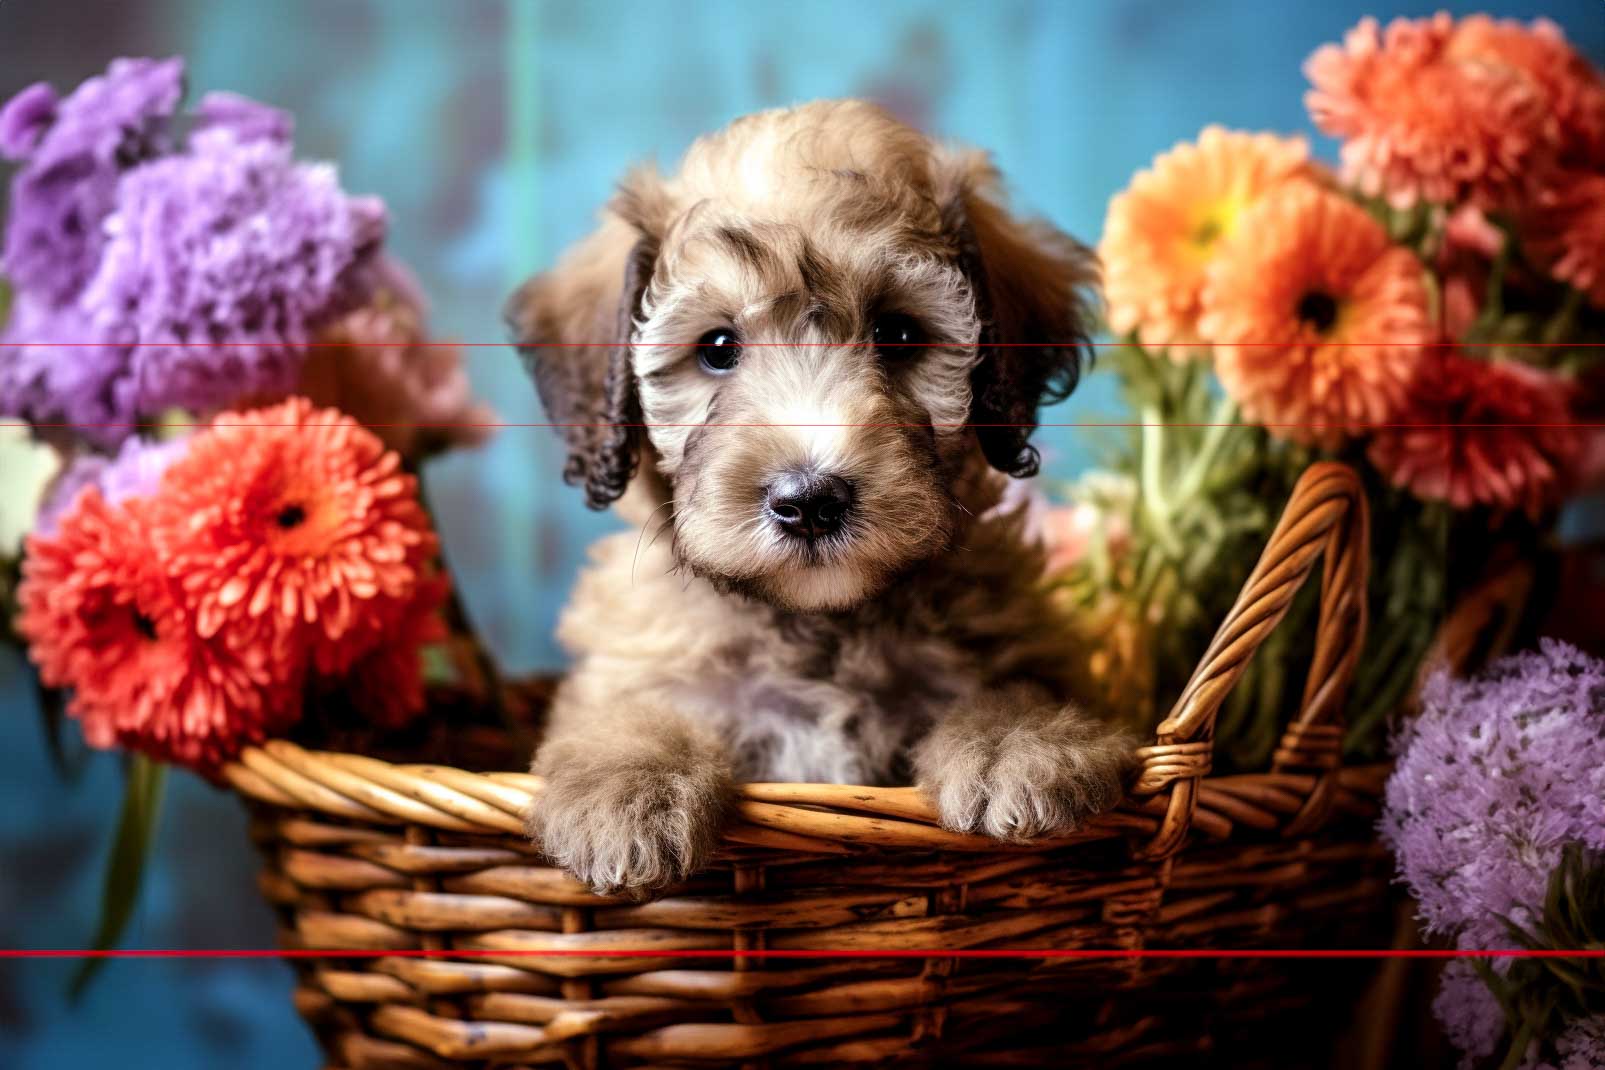 Wheaten Terrier Puppy In Basket with Flowers